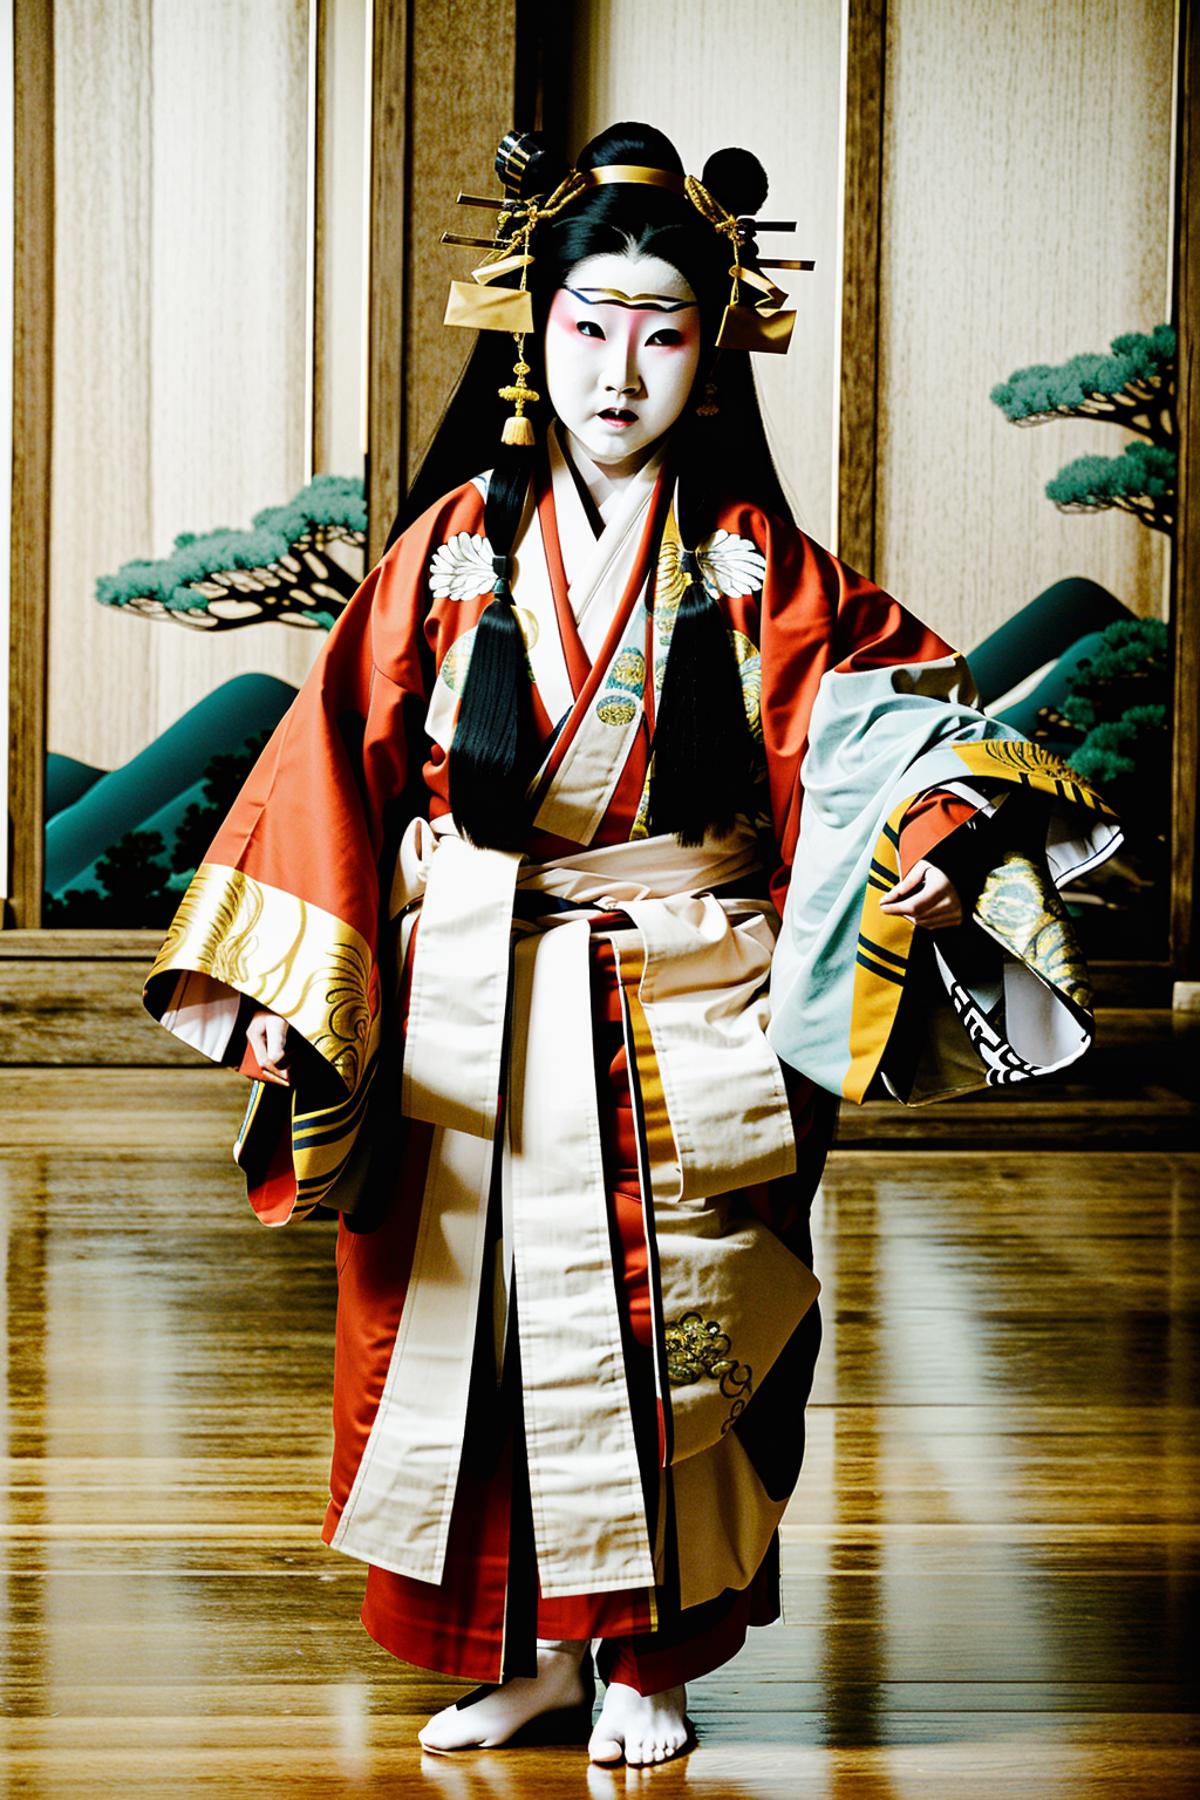 Kabuki Style image by Ciro_Negrogni